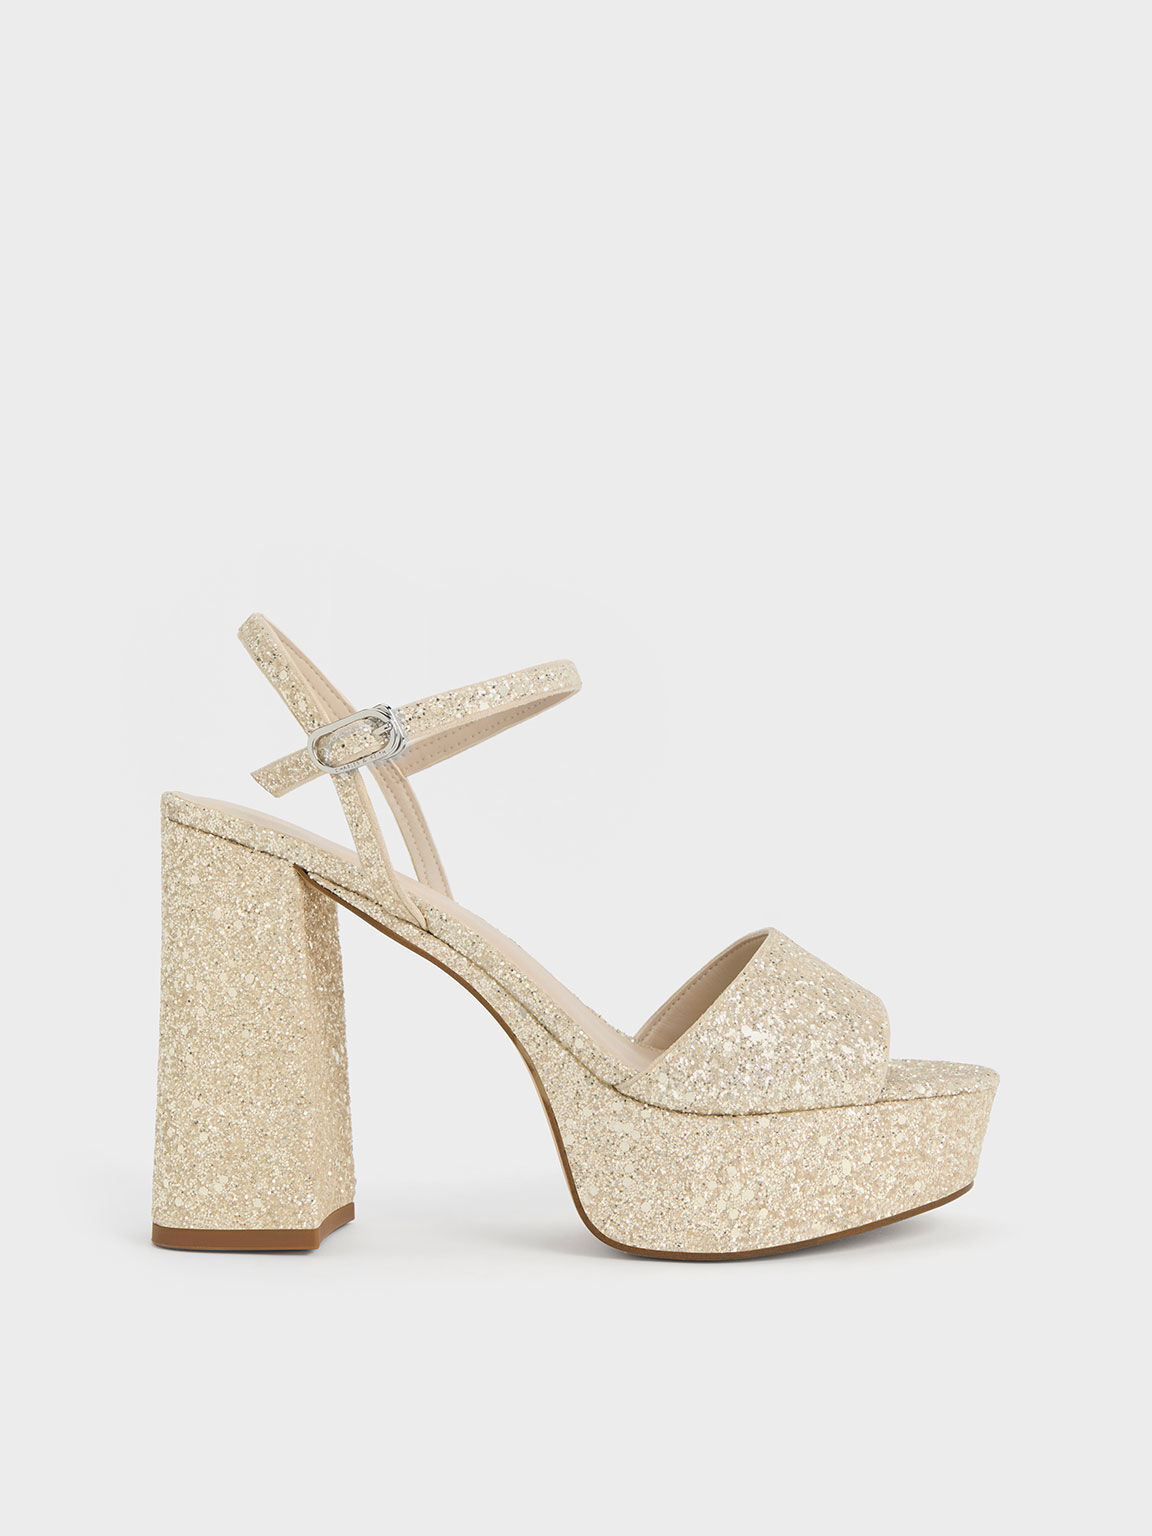 Christian Louboutin 160 Glitter Daffodil Platform Pumps | Sparkly high heels,  Heels, Sparkly heels